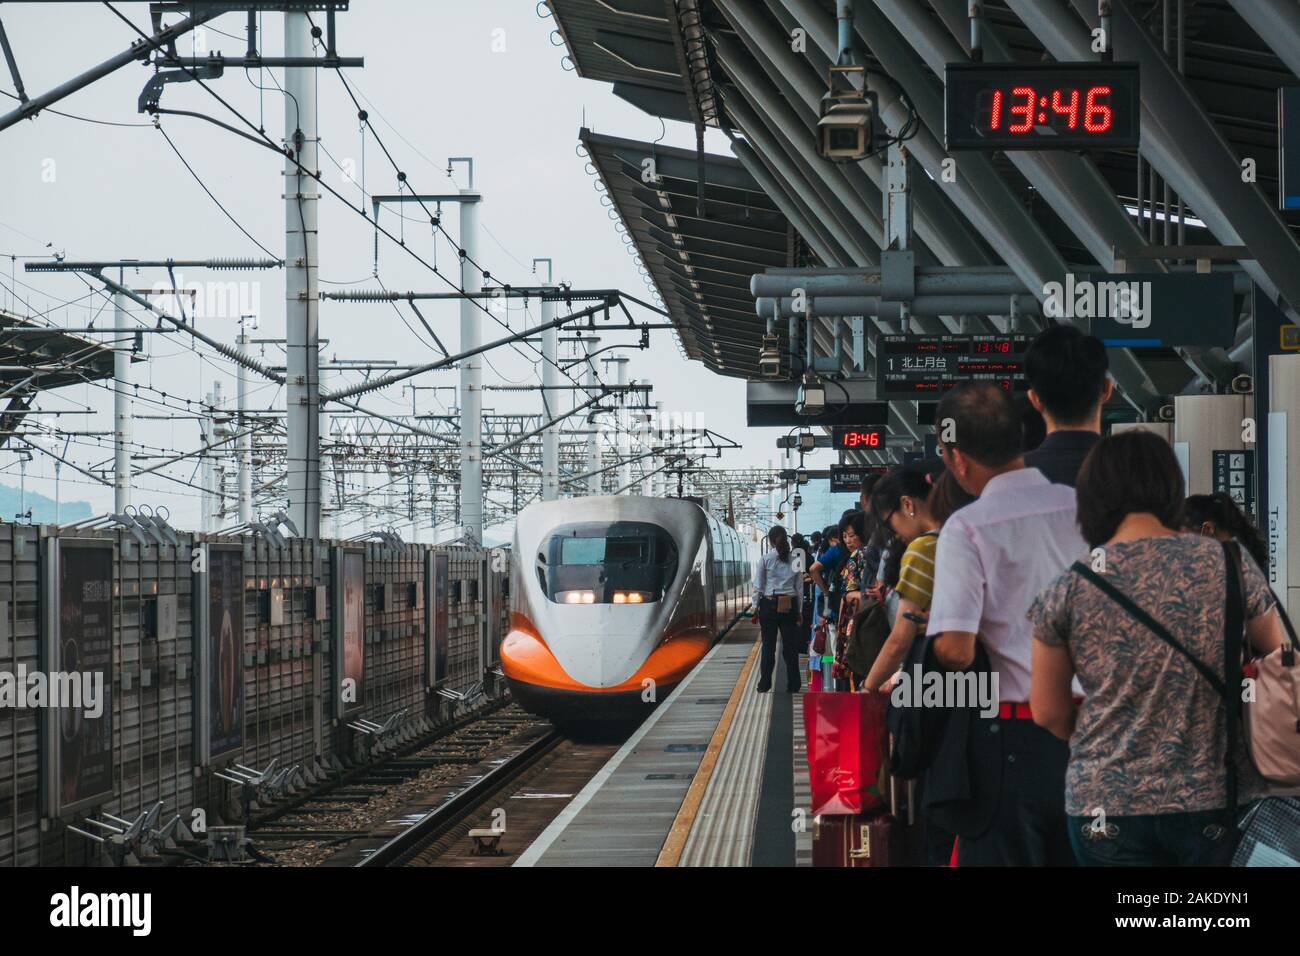 Passengers wait on the platform as a Taiwan High Speed Rail bullet train arrives at Tainan HSR station, Taiwan Stock Photo